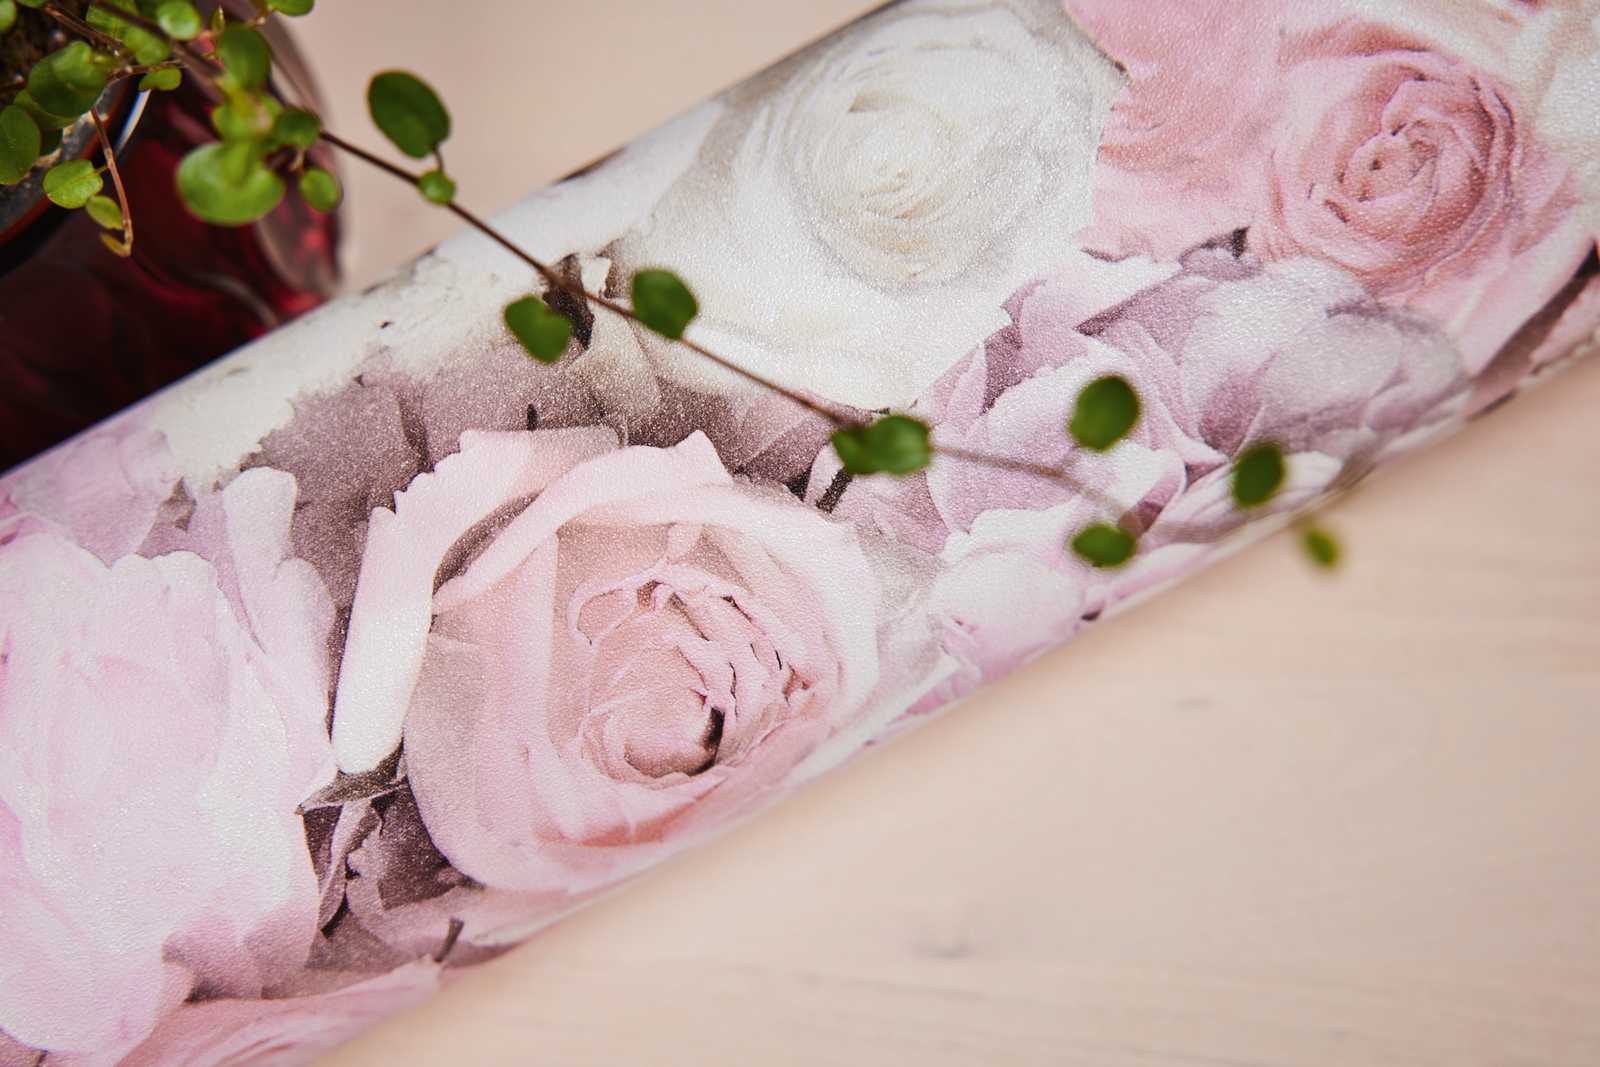             Carta da parati motivo rose e fiori - rosa, bianco
        